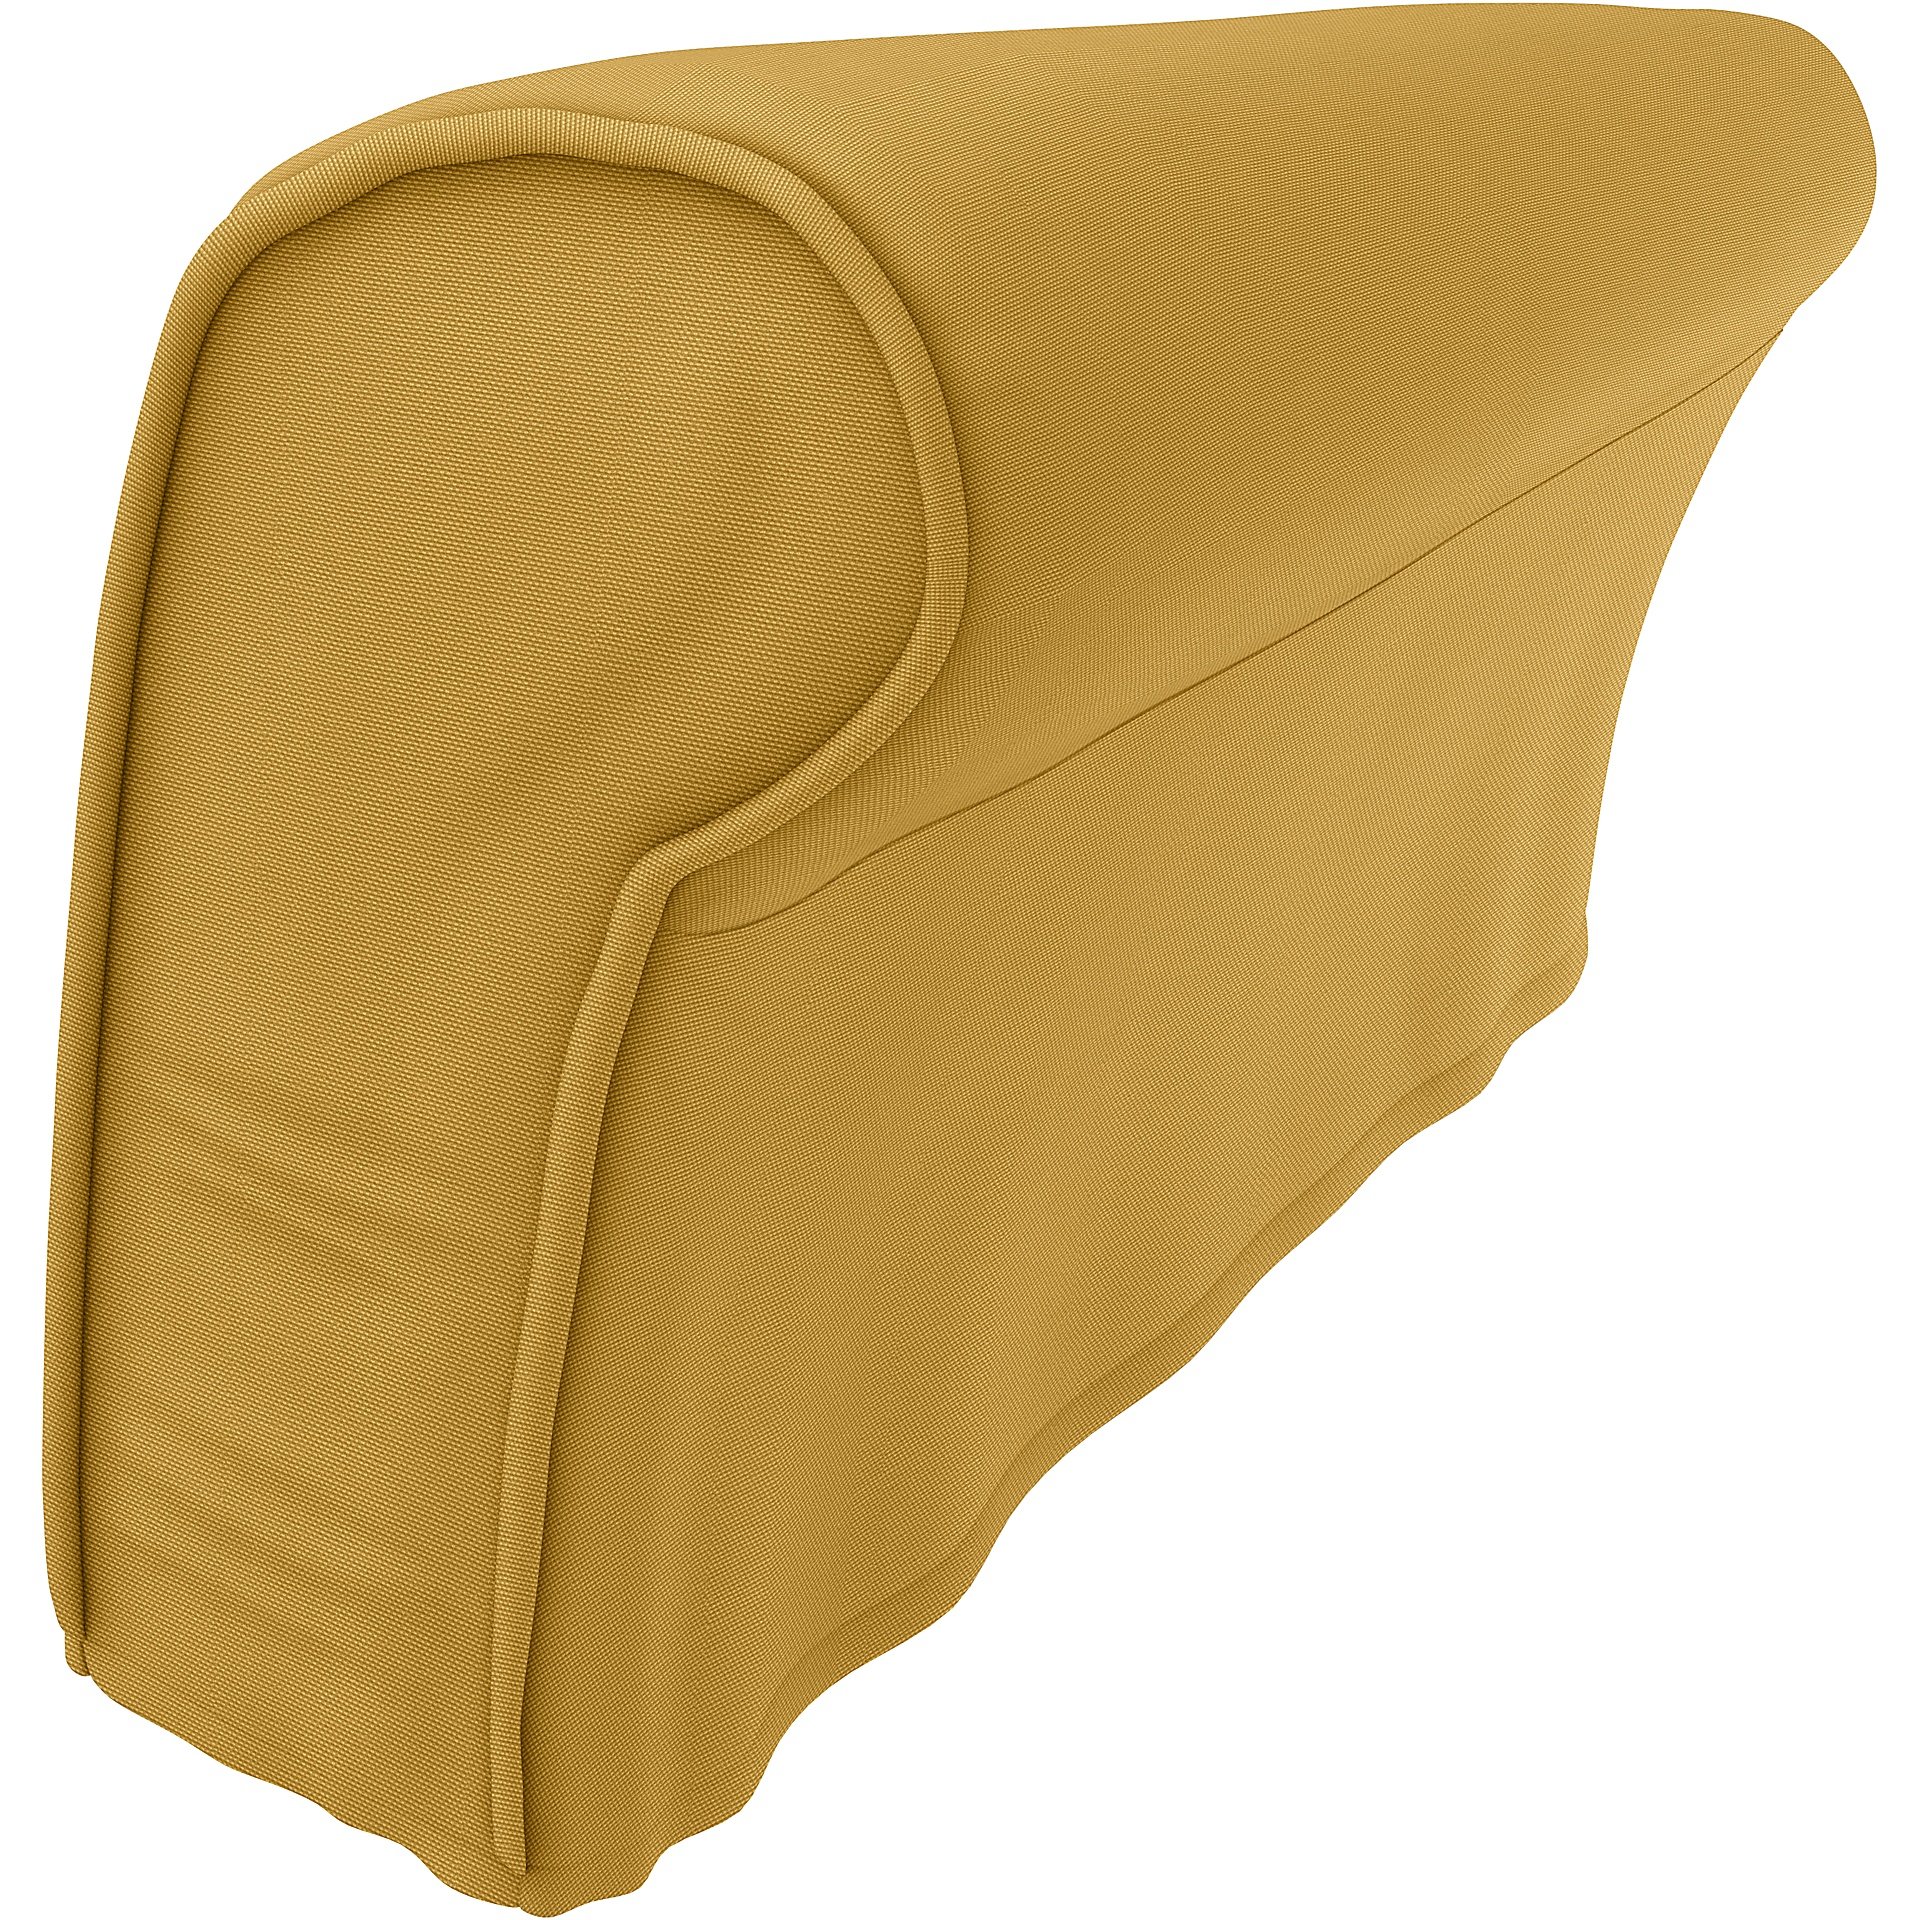 IKEA - Strandmon Armrest Protectors (One pair), Honey Mustard, Cotton - Bemz